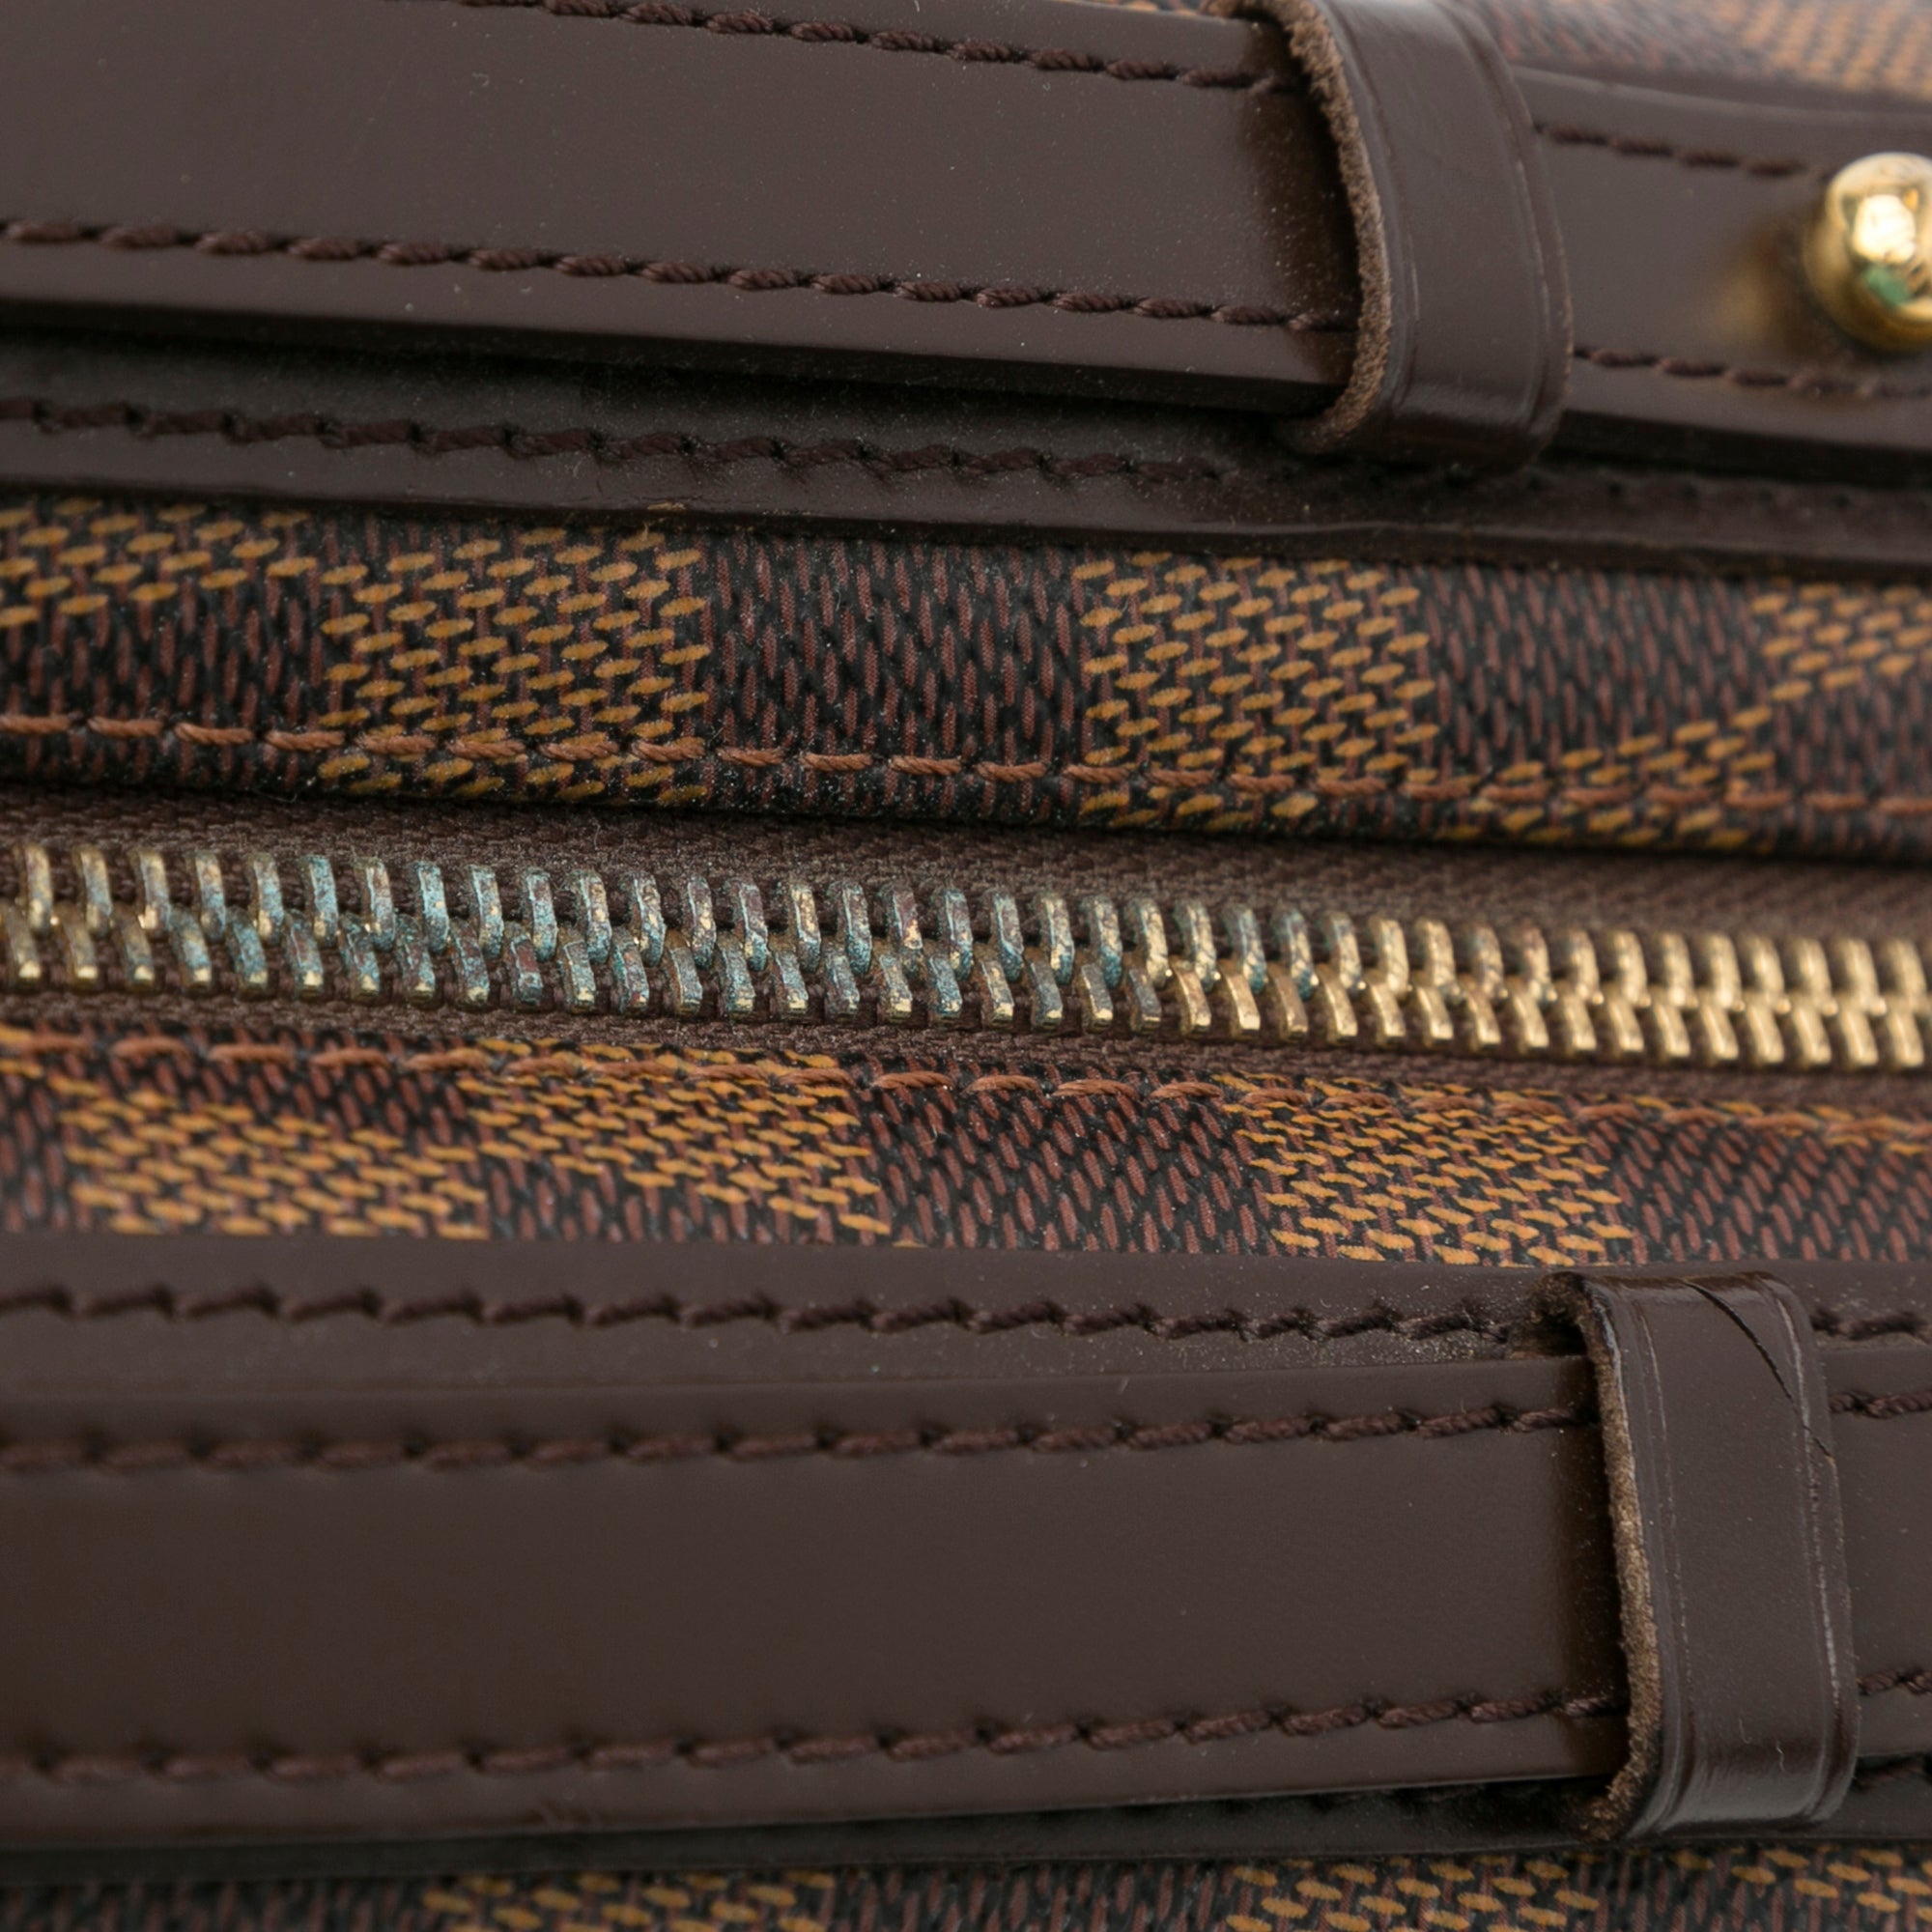 Brown Louis Vuitton Damier Ebene Cabas Rivington Tote Bag – Designer Revival